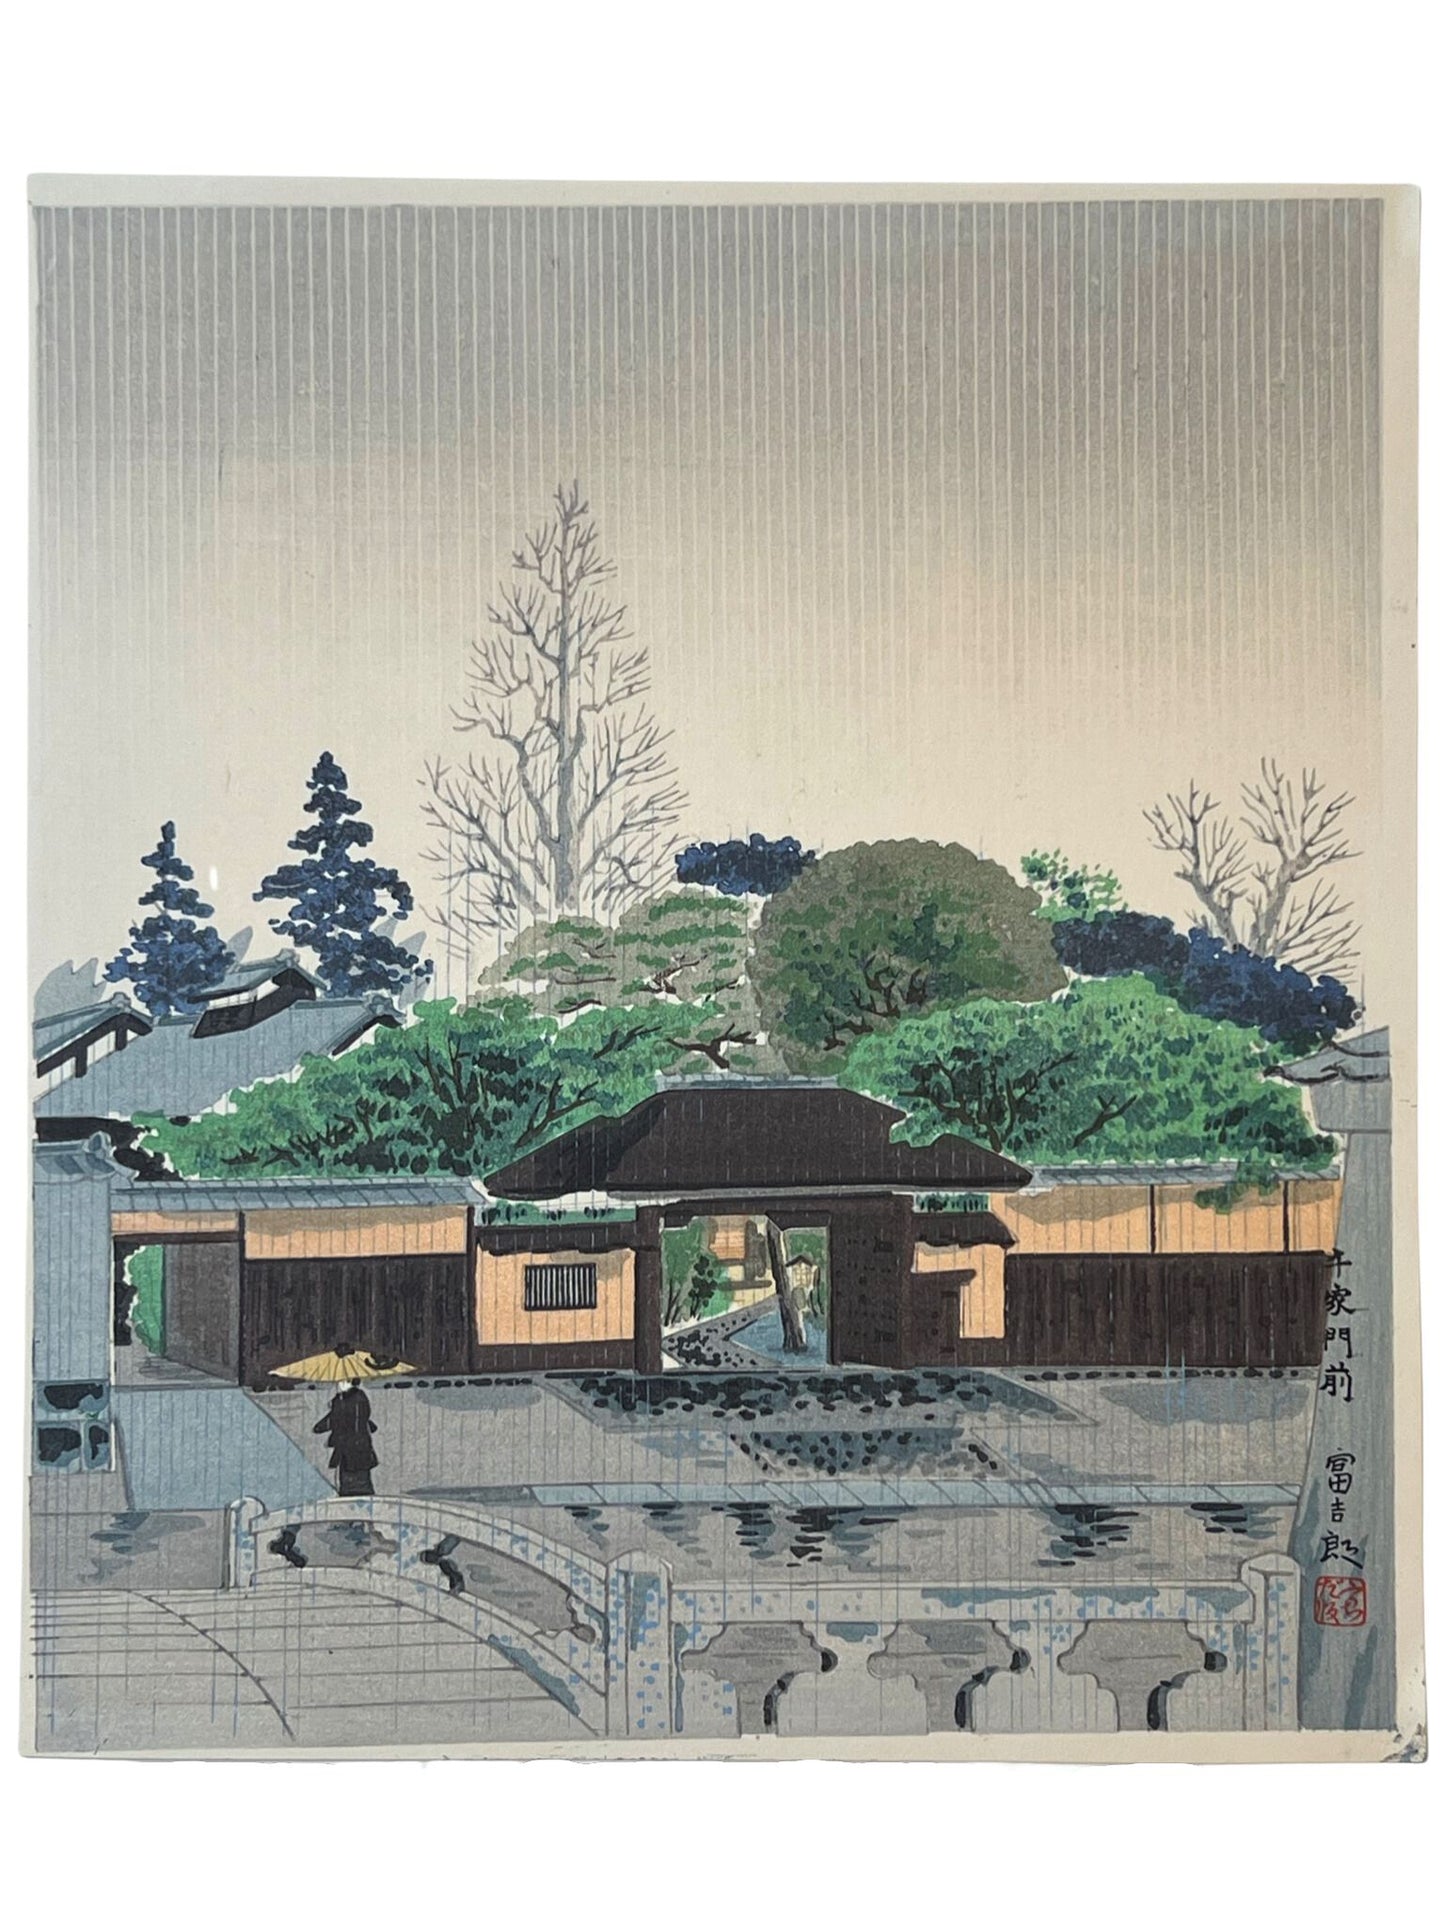 Estampe Japonaise de Tokuriki Tomikichiro | Série des 12 mois à Kyoto, juin, sado senke